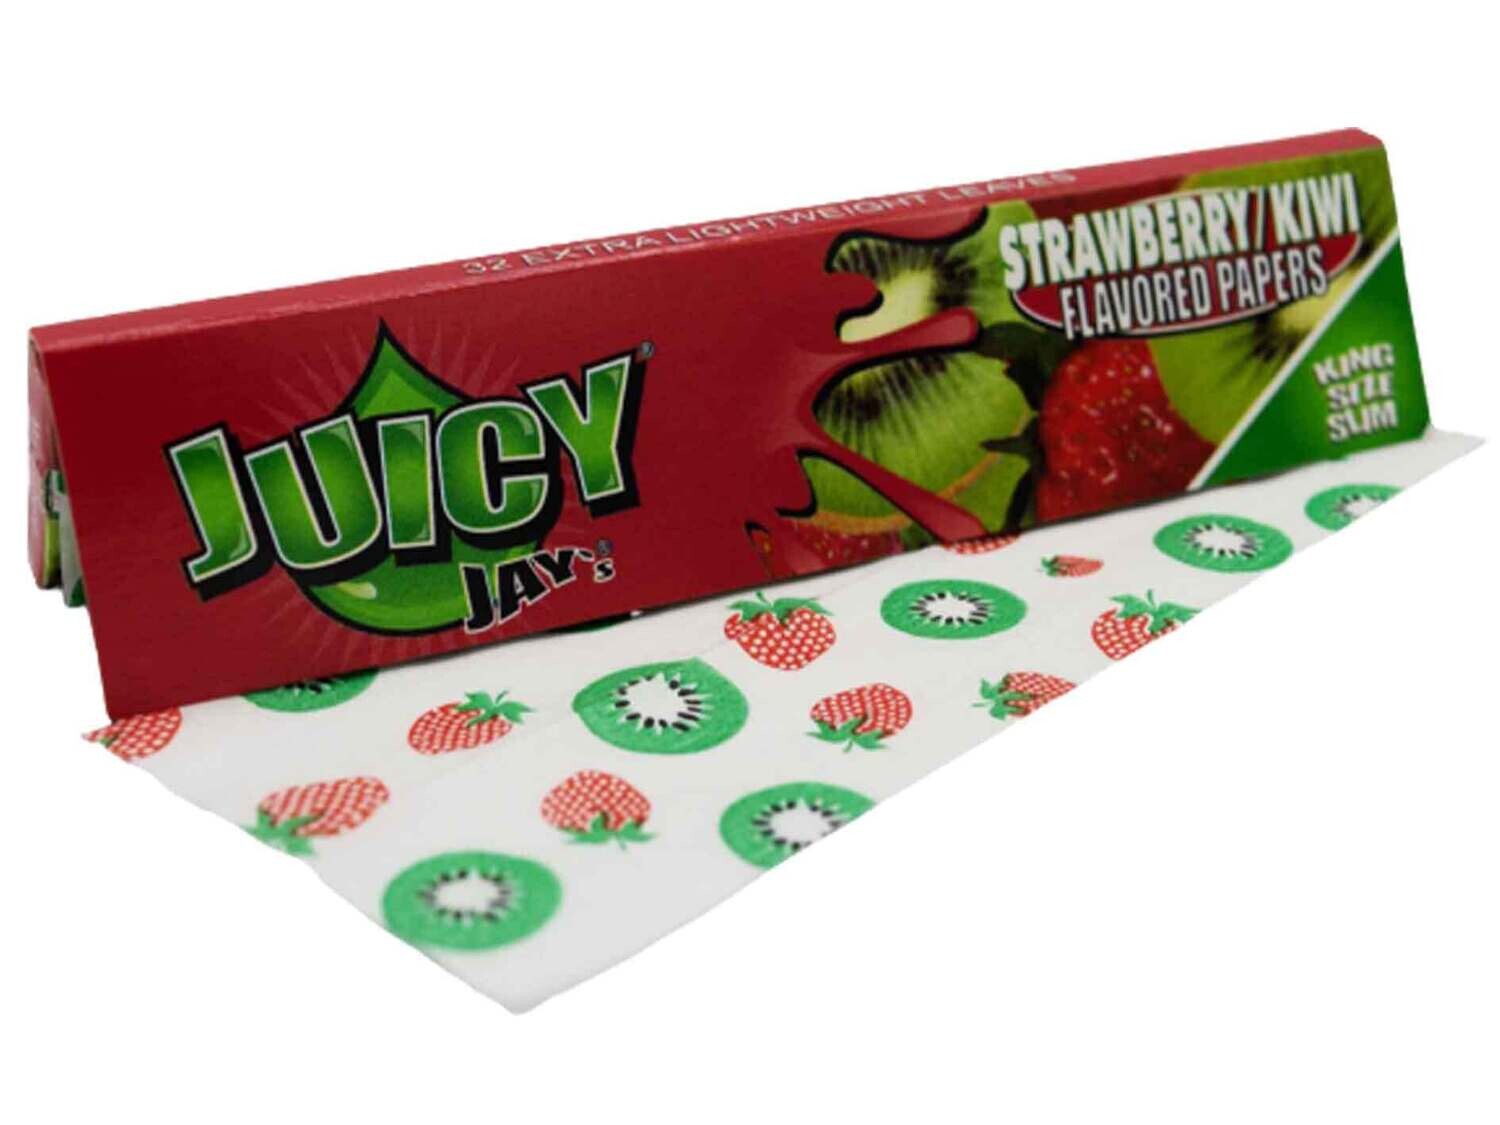 Juicy Jay's King Size StrawBerry - Kiwi